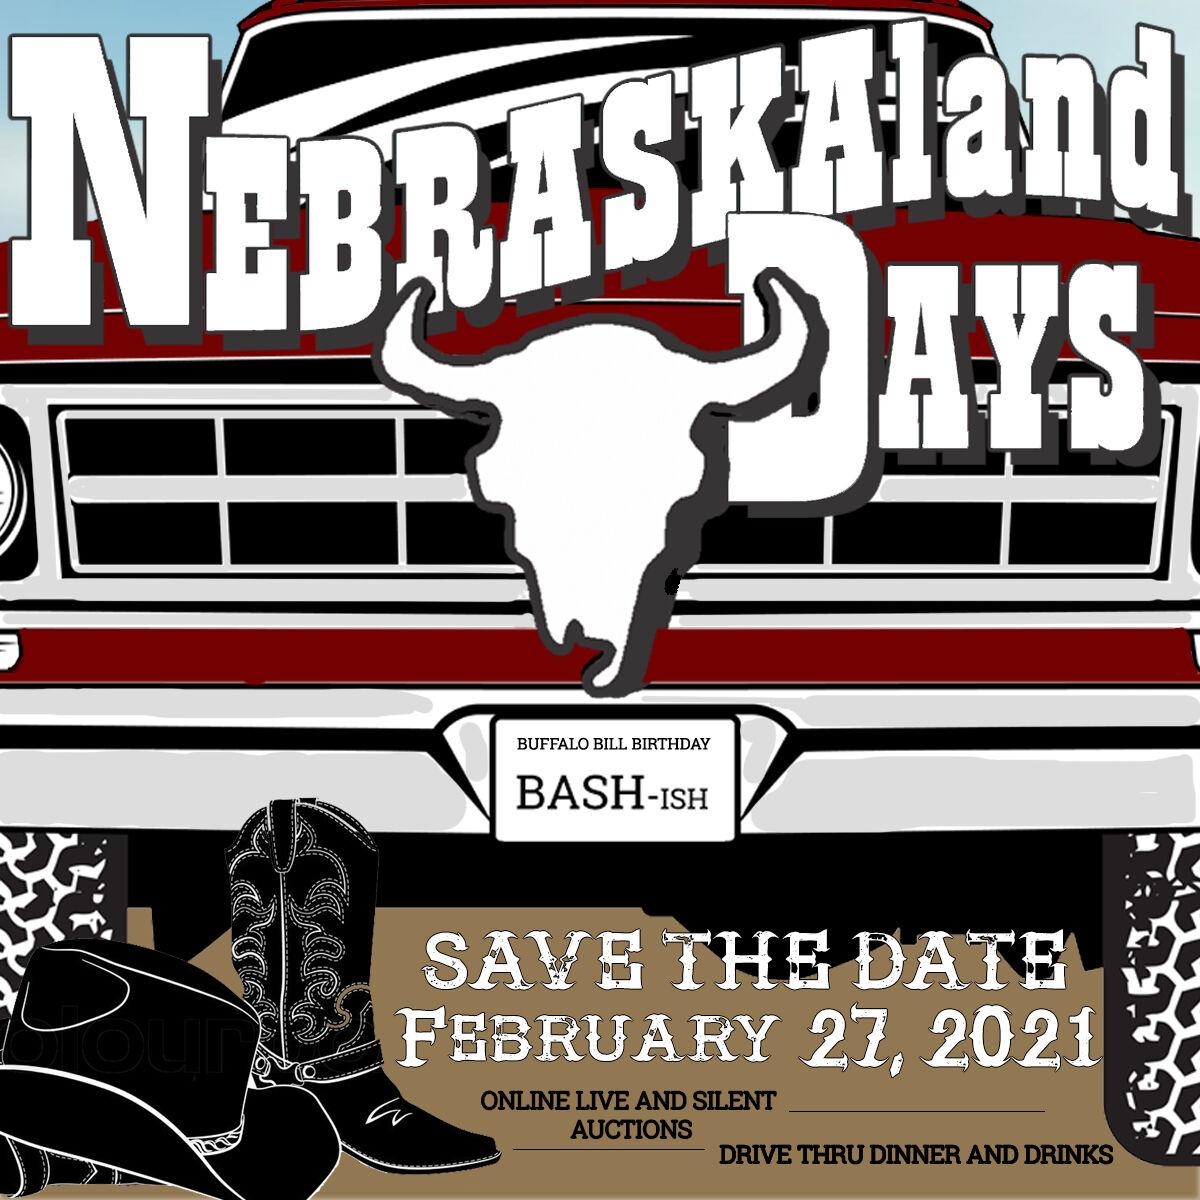 Nebraskaland Days to host drivethru birthday bash for Buffalo Bill